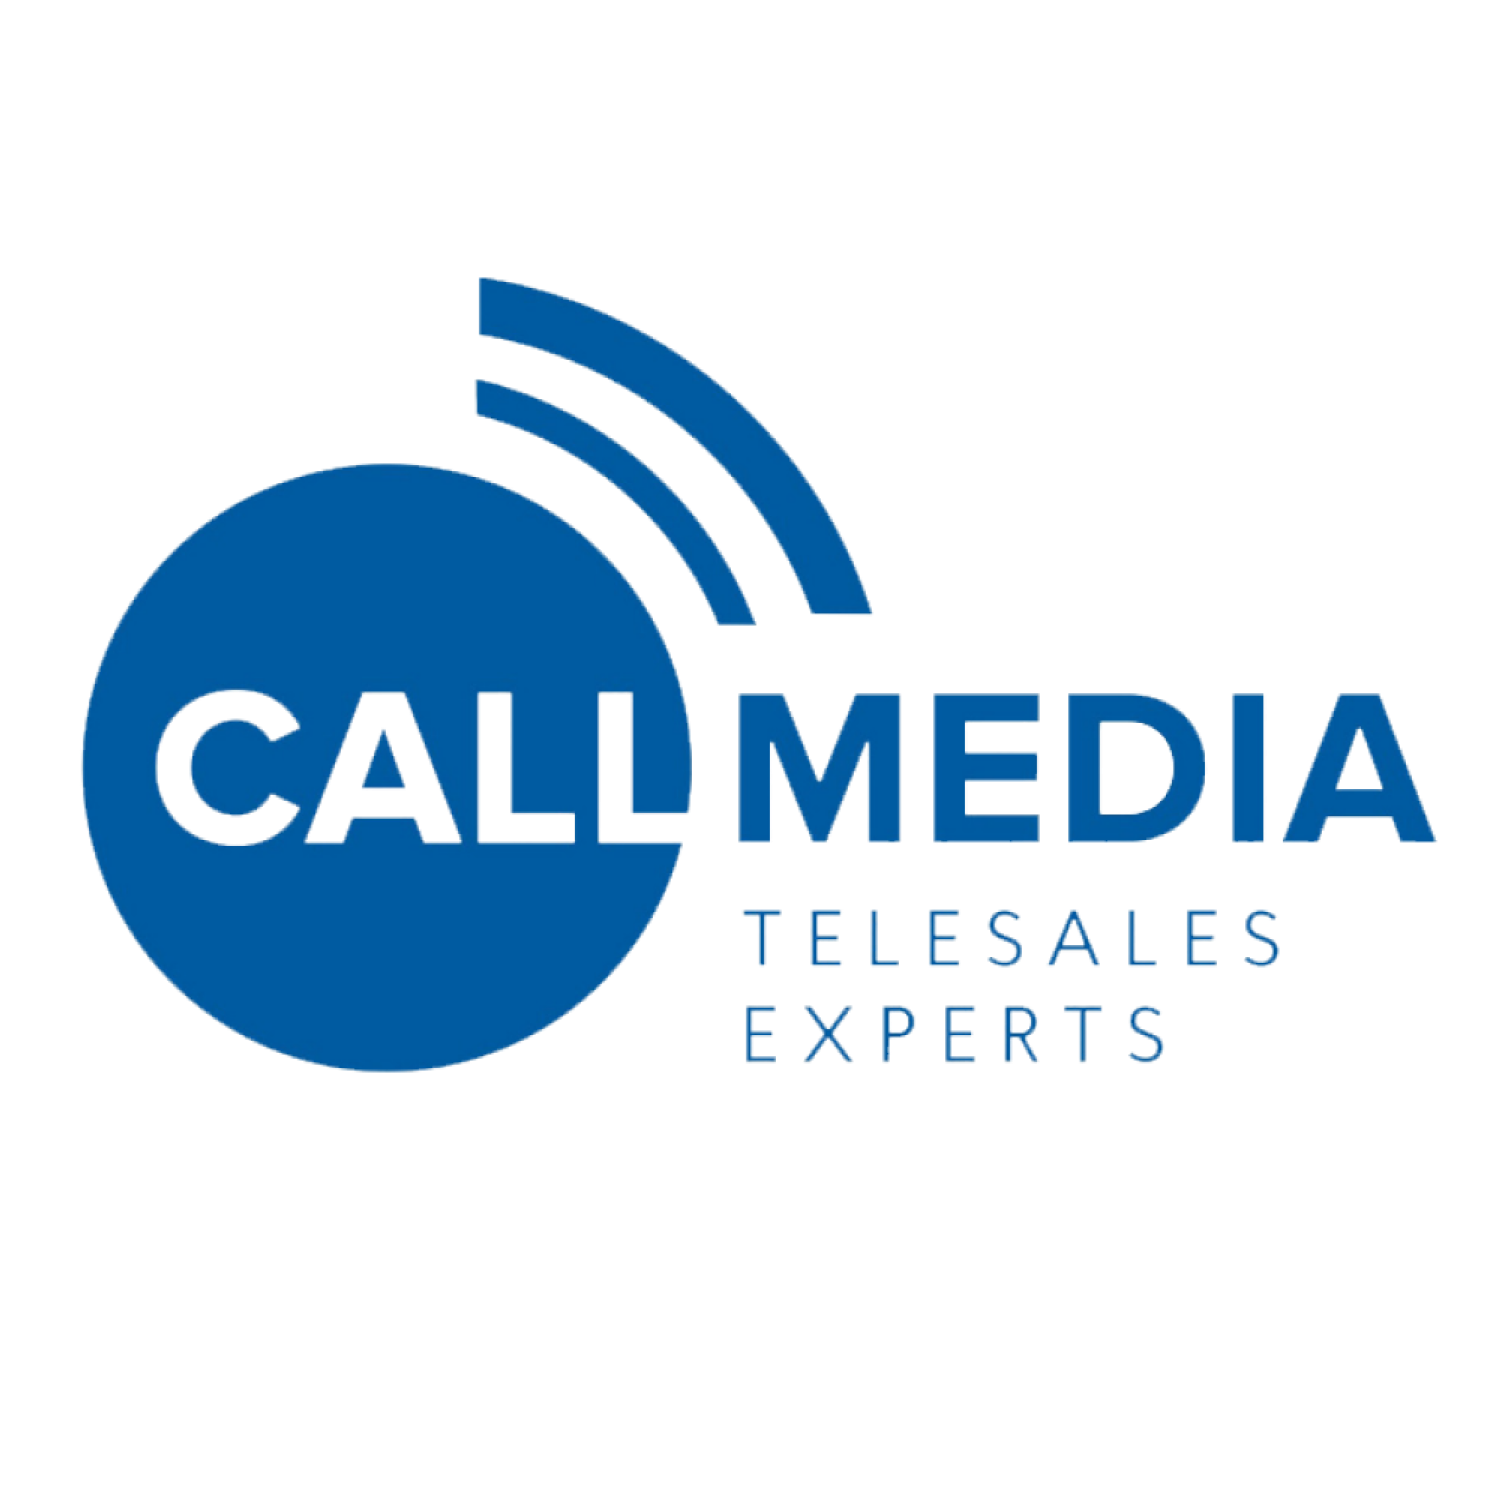 Callmedia